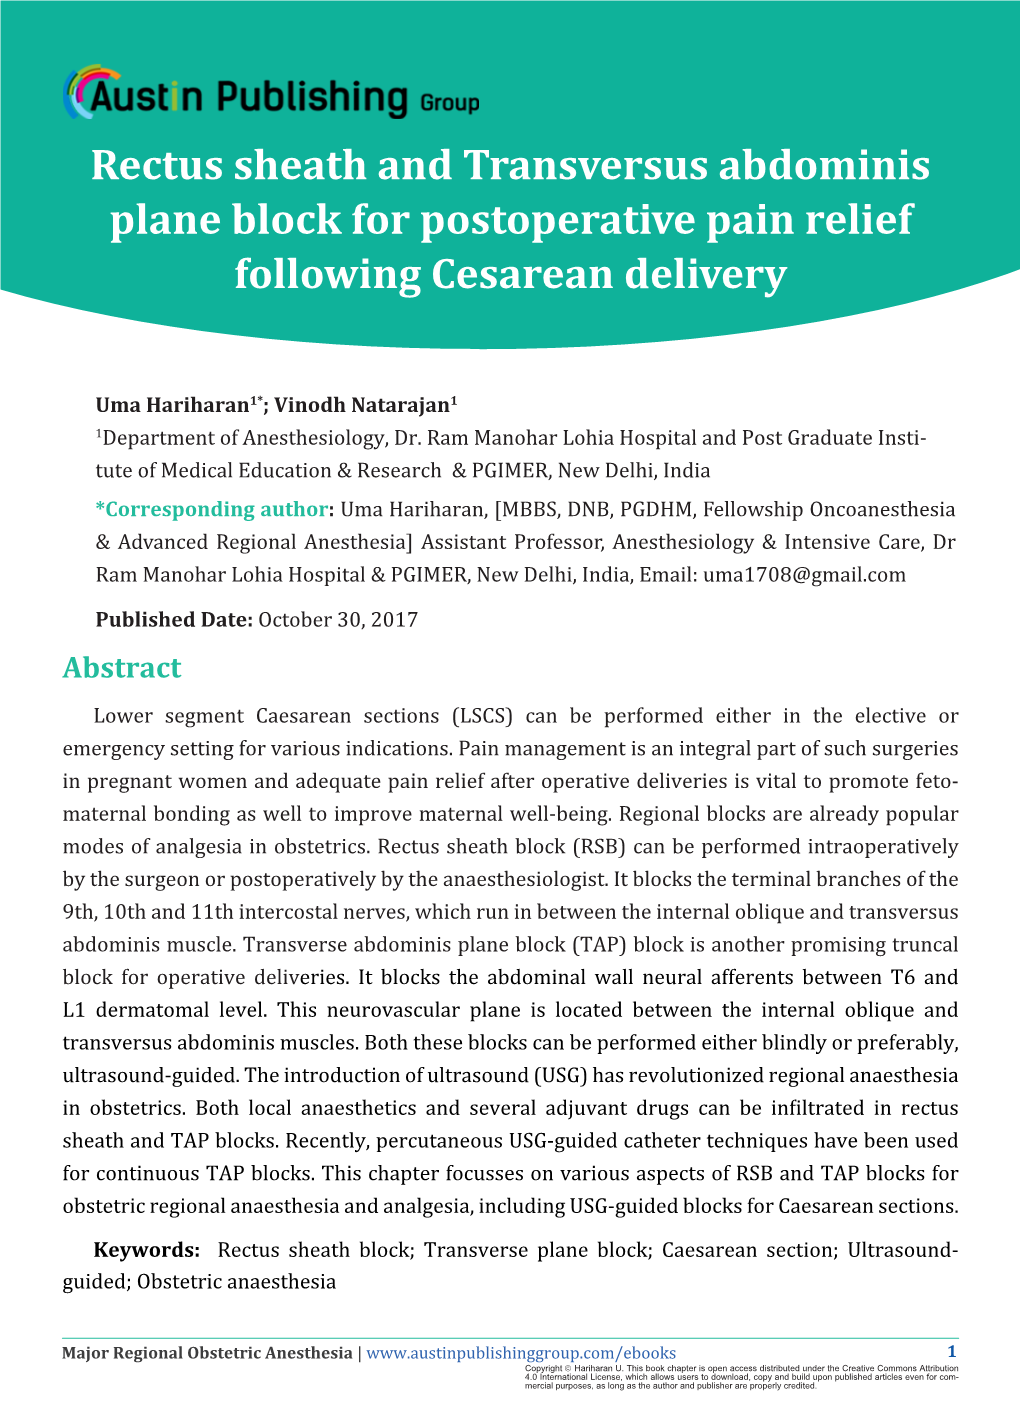 Rectus Sheath and Transversus Abdominis Plane Block for Postoperative Pain Relief Following Cesarean Delivery